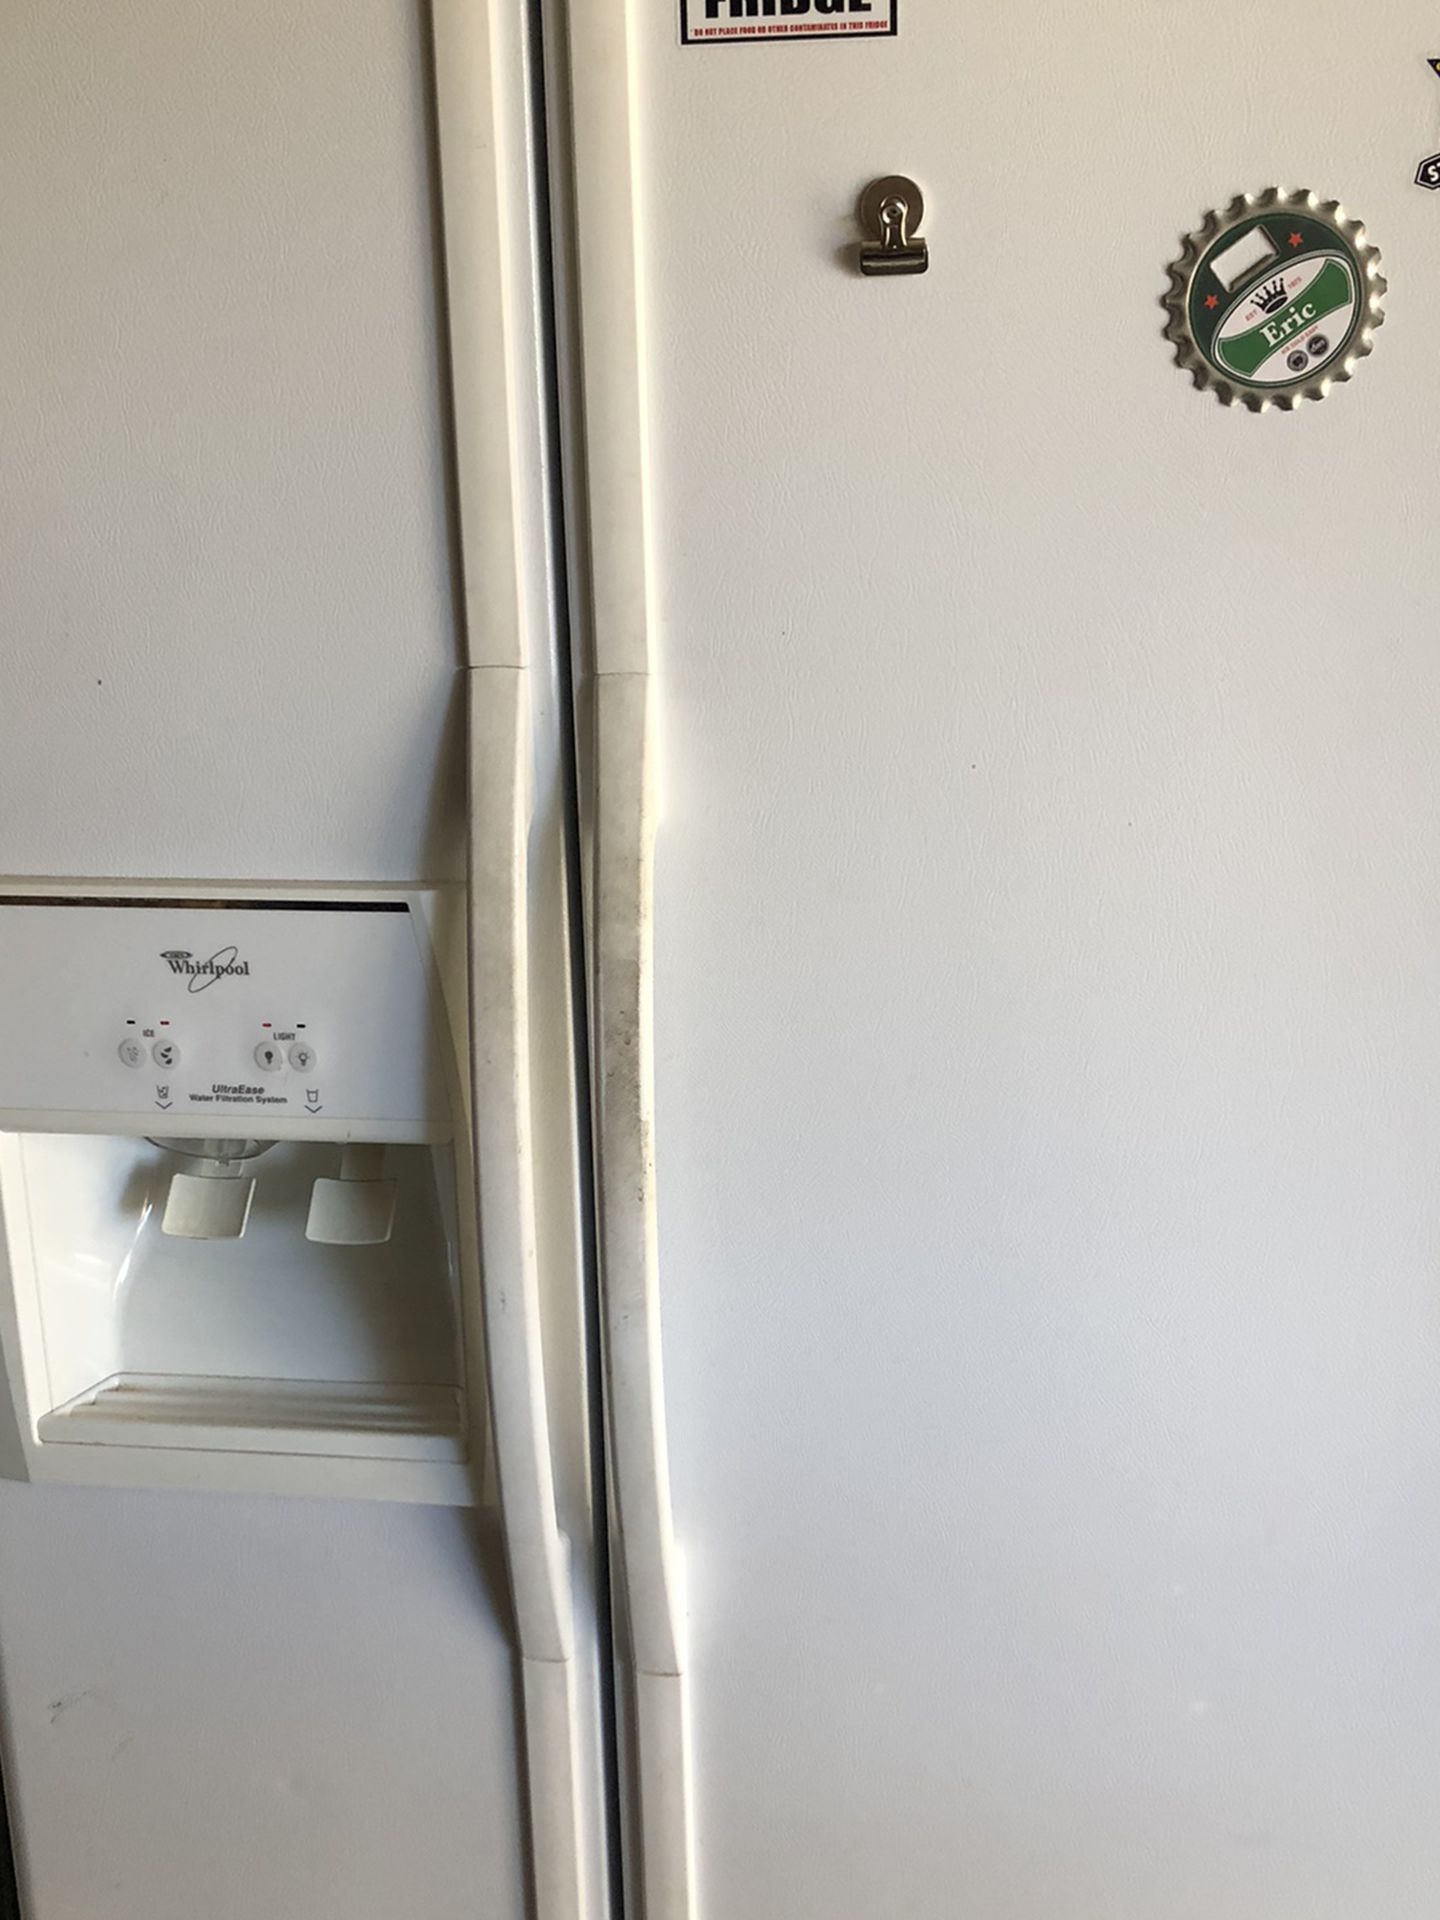 Whirlpool Side-by-side refrigerator